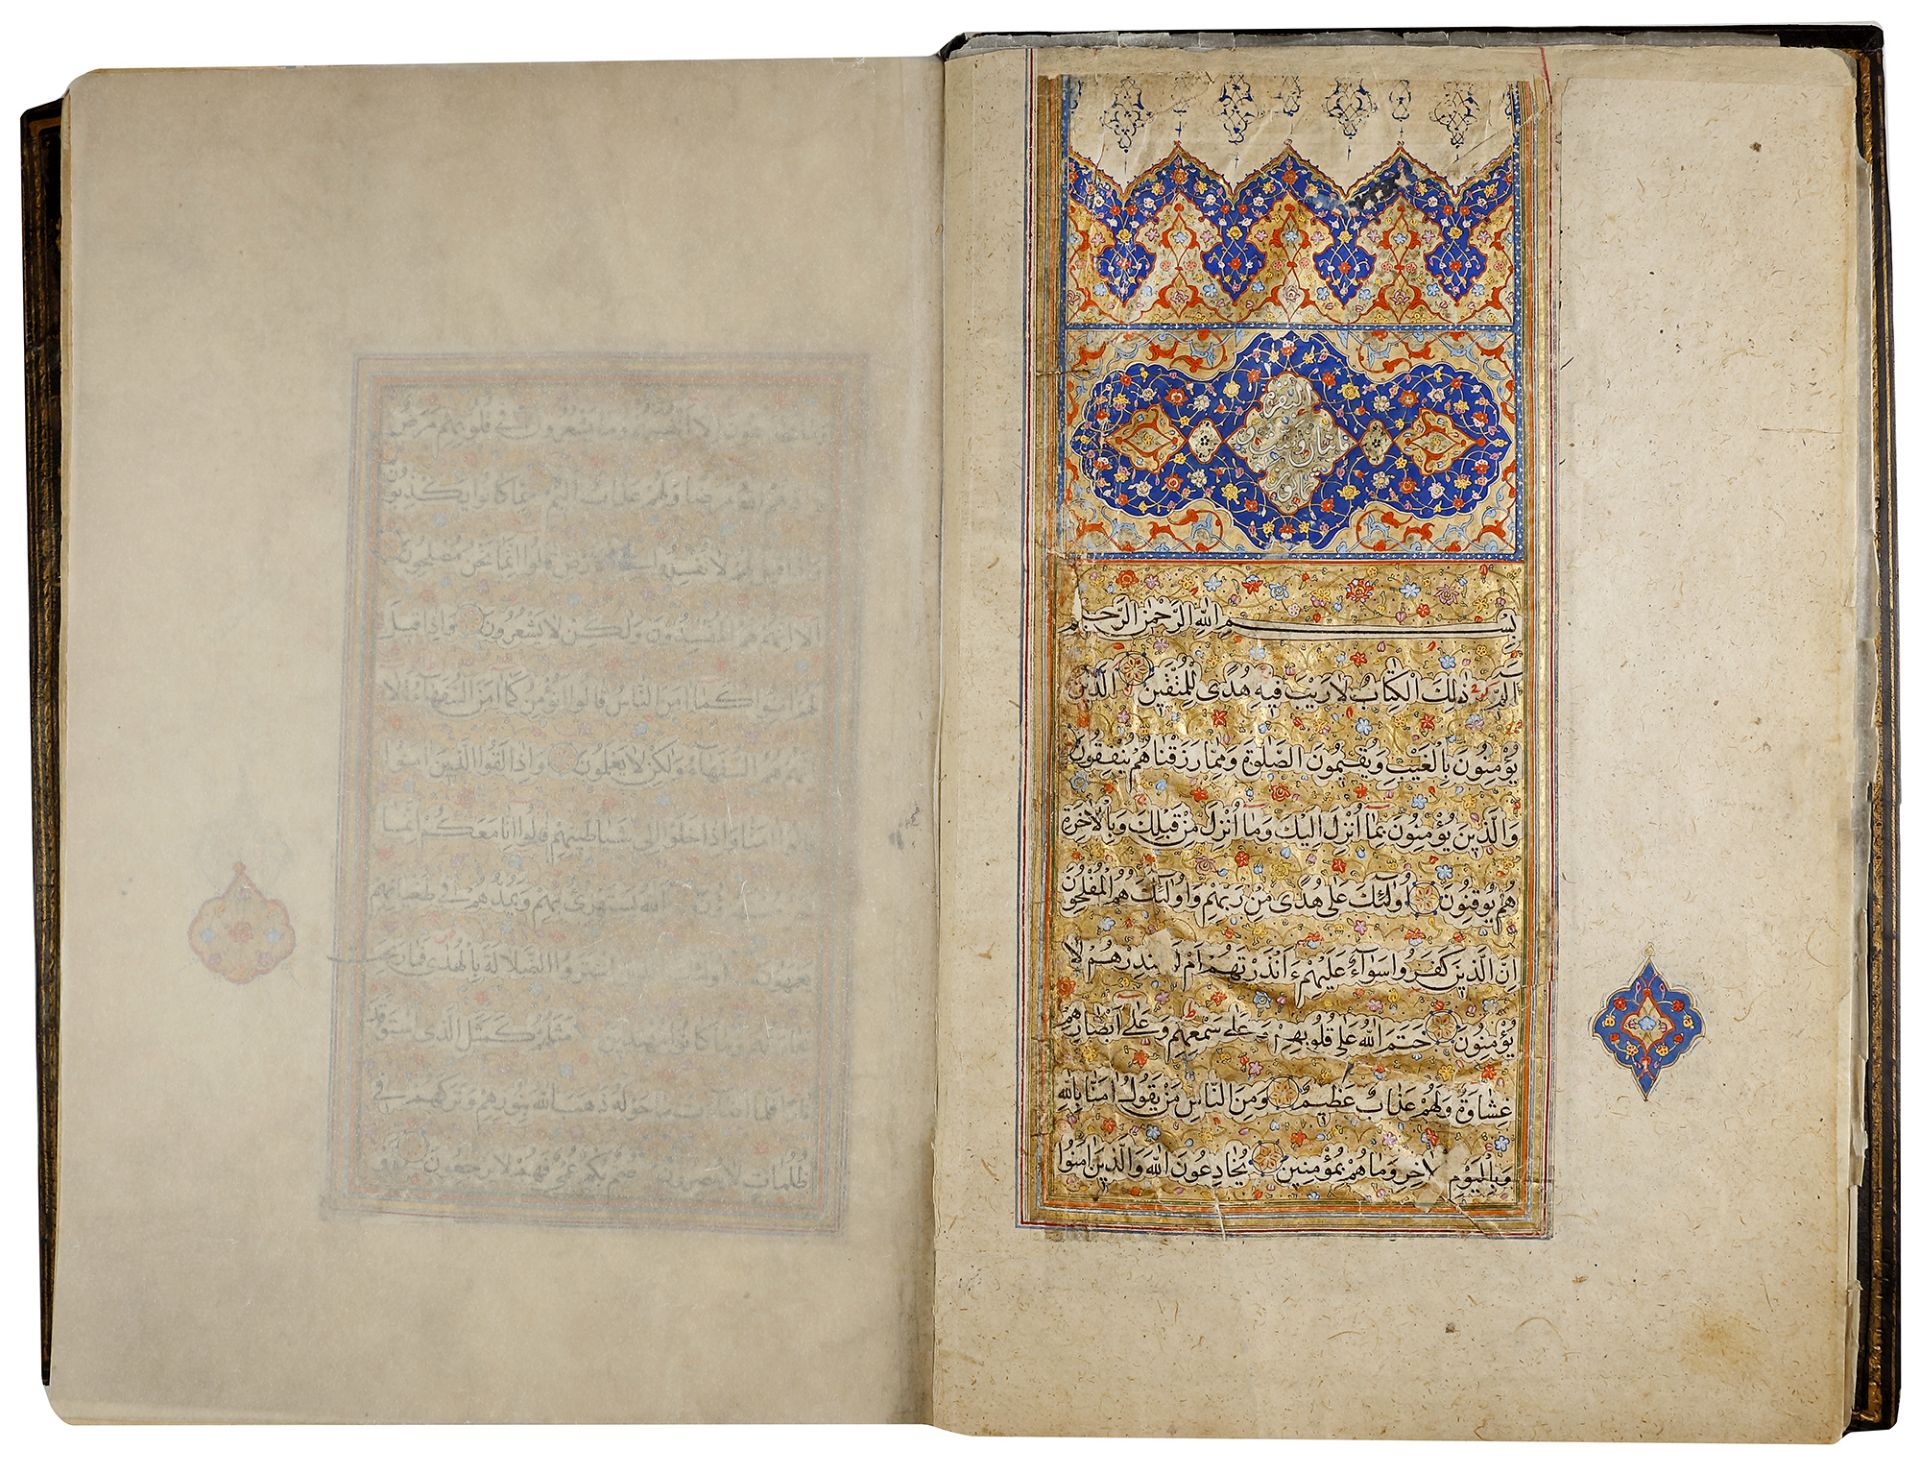 A LARGE ILLUMINATED QURAN, COPIED BY 'ALA'-AL-DIN MUHAMMAD AL-TABRIZI SAFAVID, PERSIA, 16TH CENT - Image 9 of 26